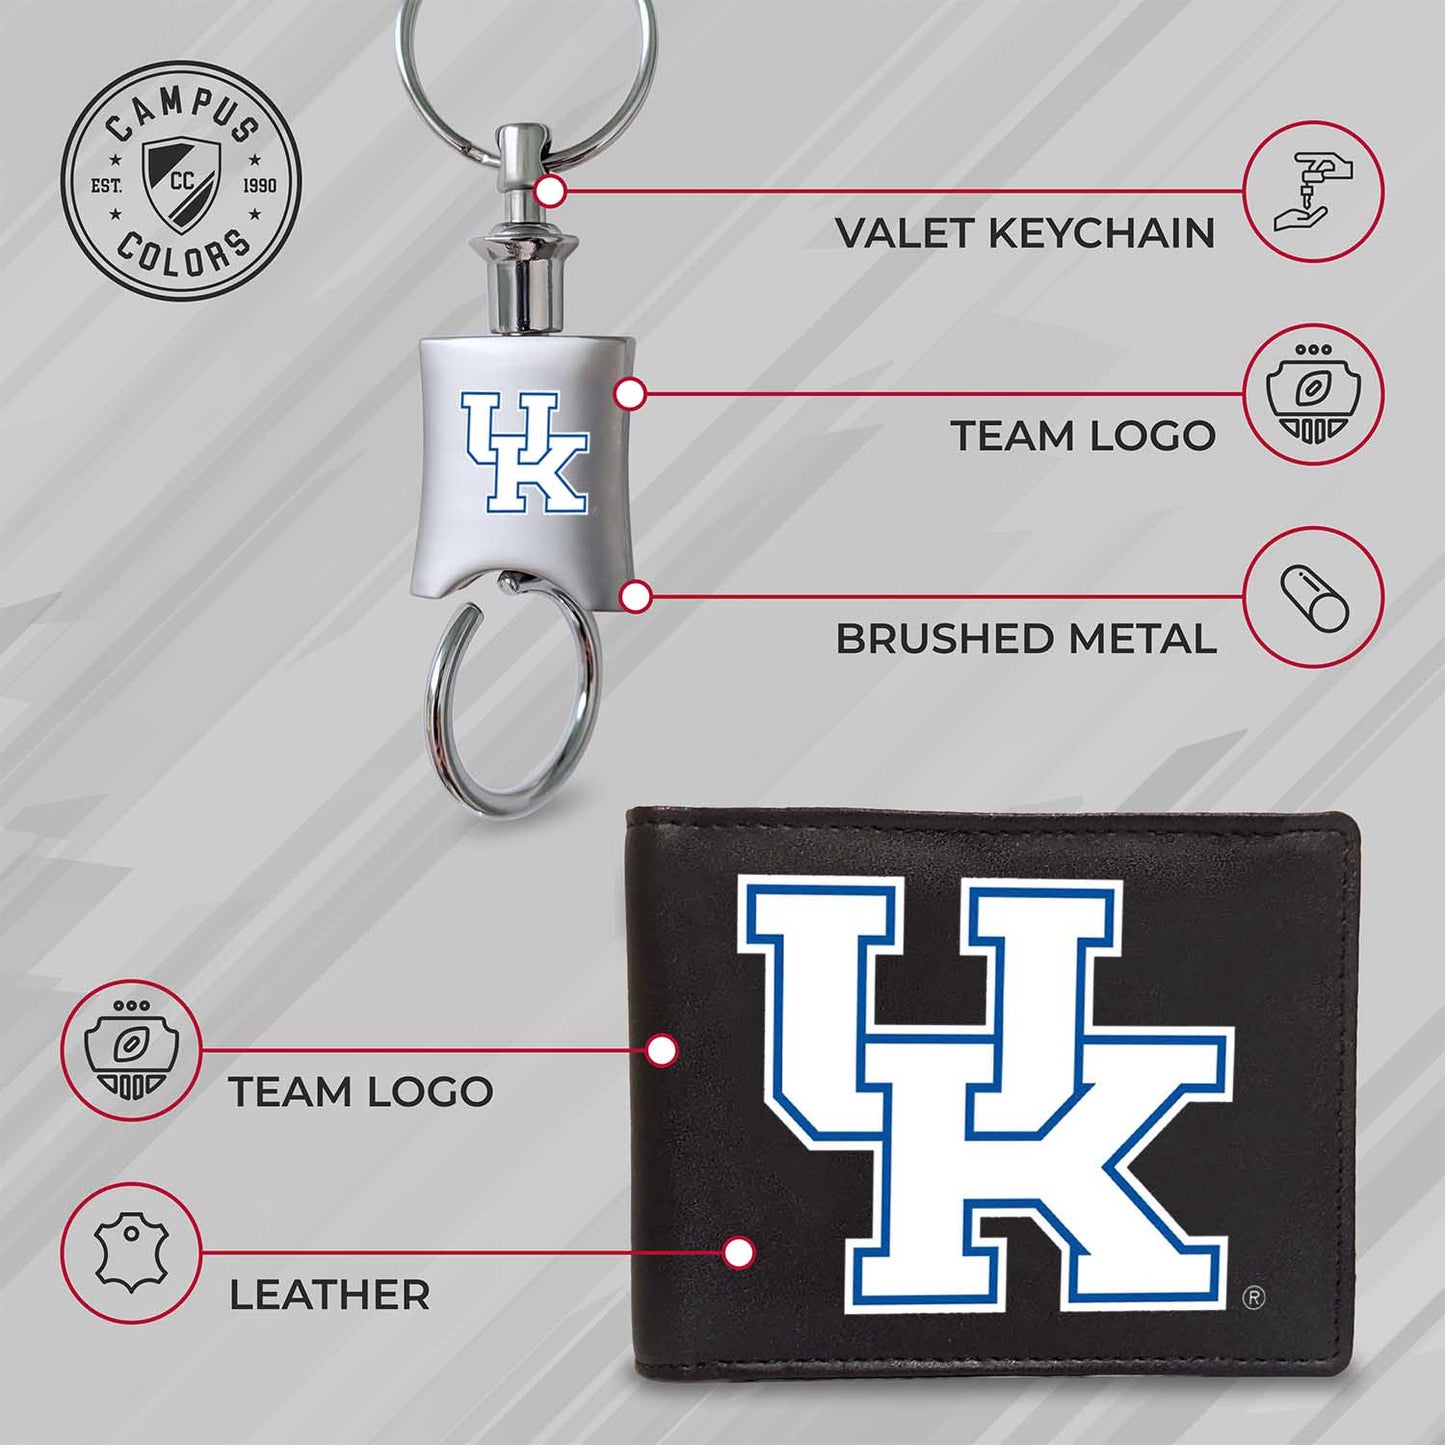 Kentucky Wildcats University Team Logo Mens Bi Fold Wallet and Unisex Valet Keychain Bundle - Black